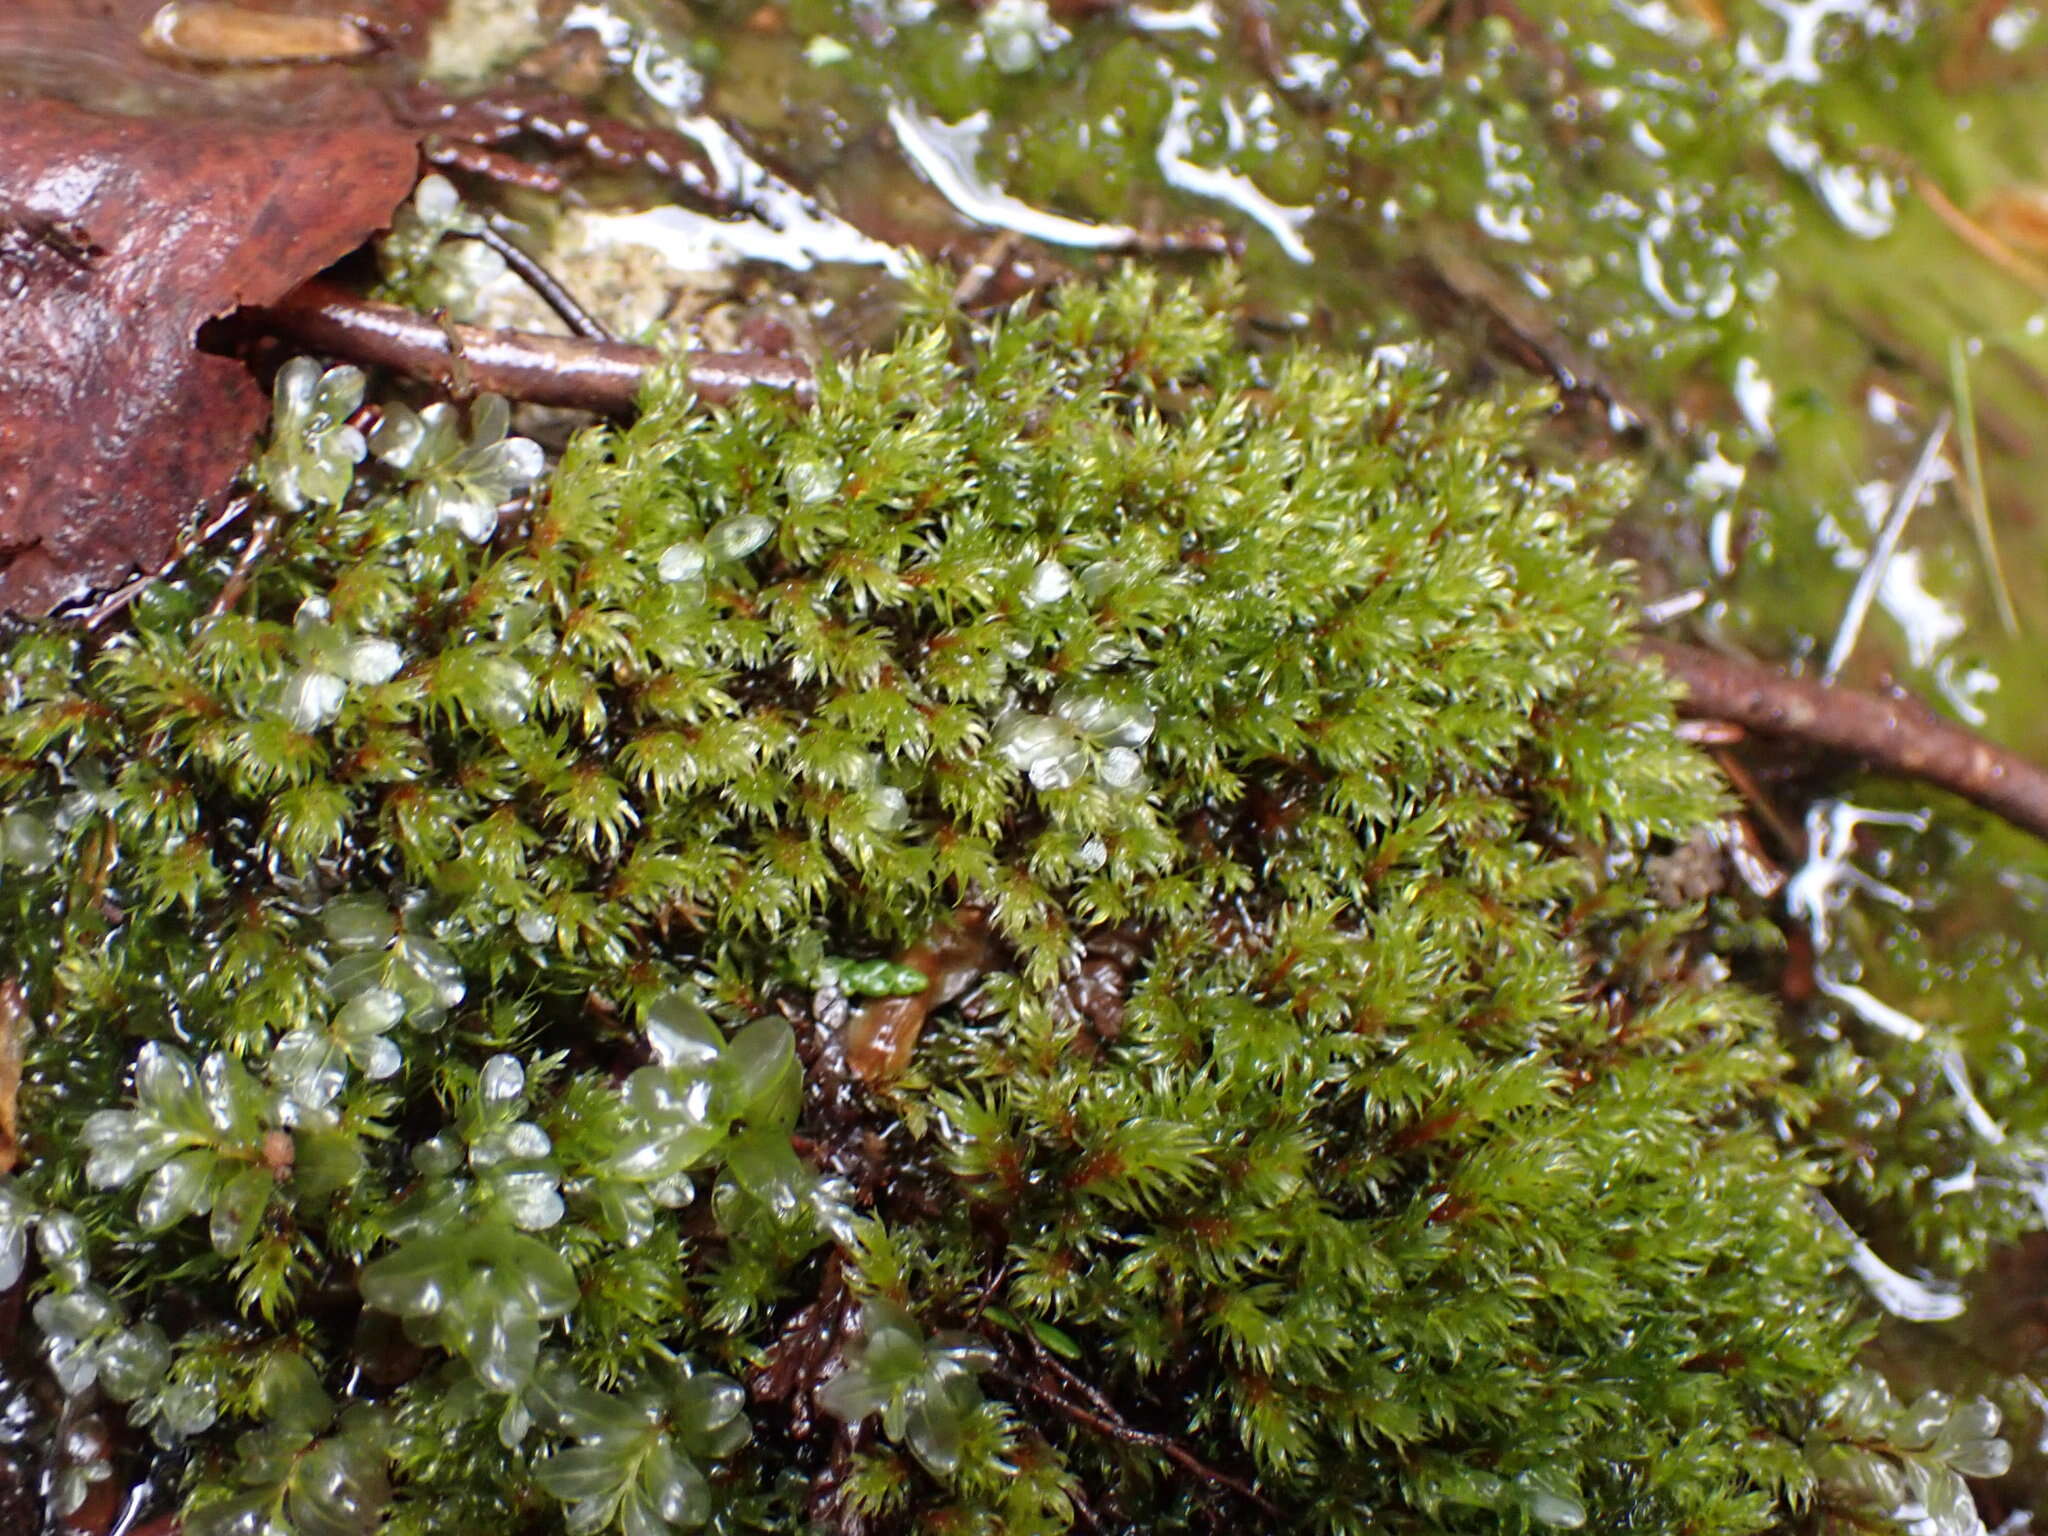 Image of longbract pohlia moss